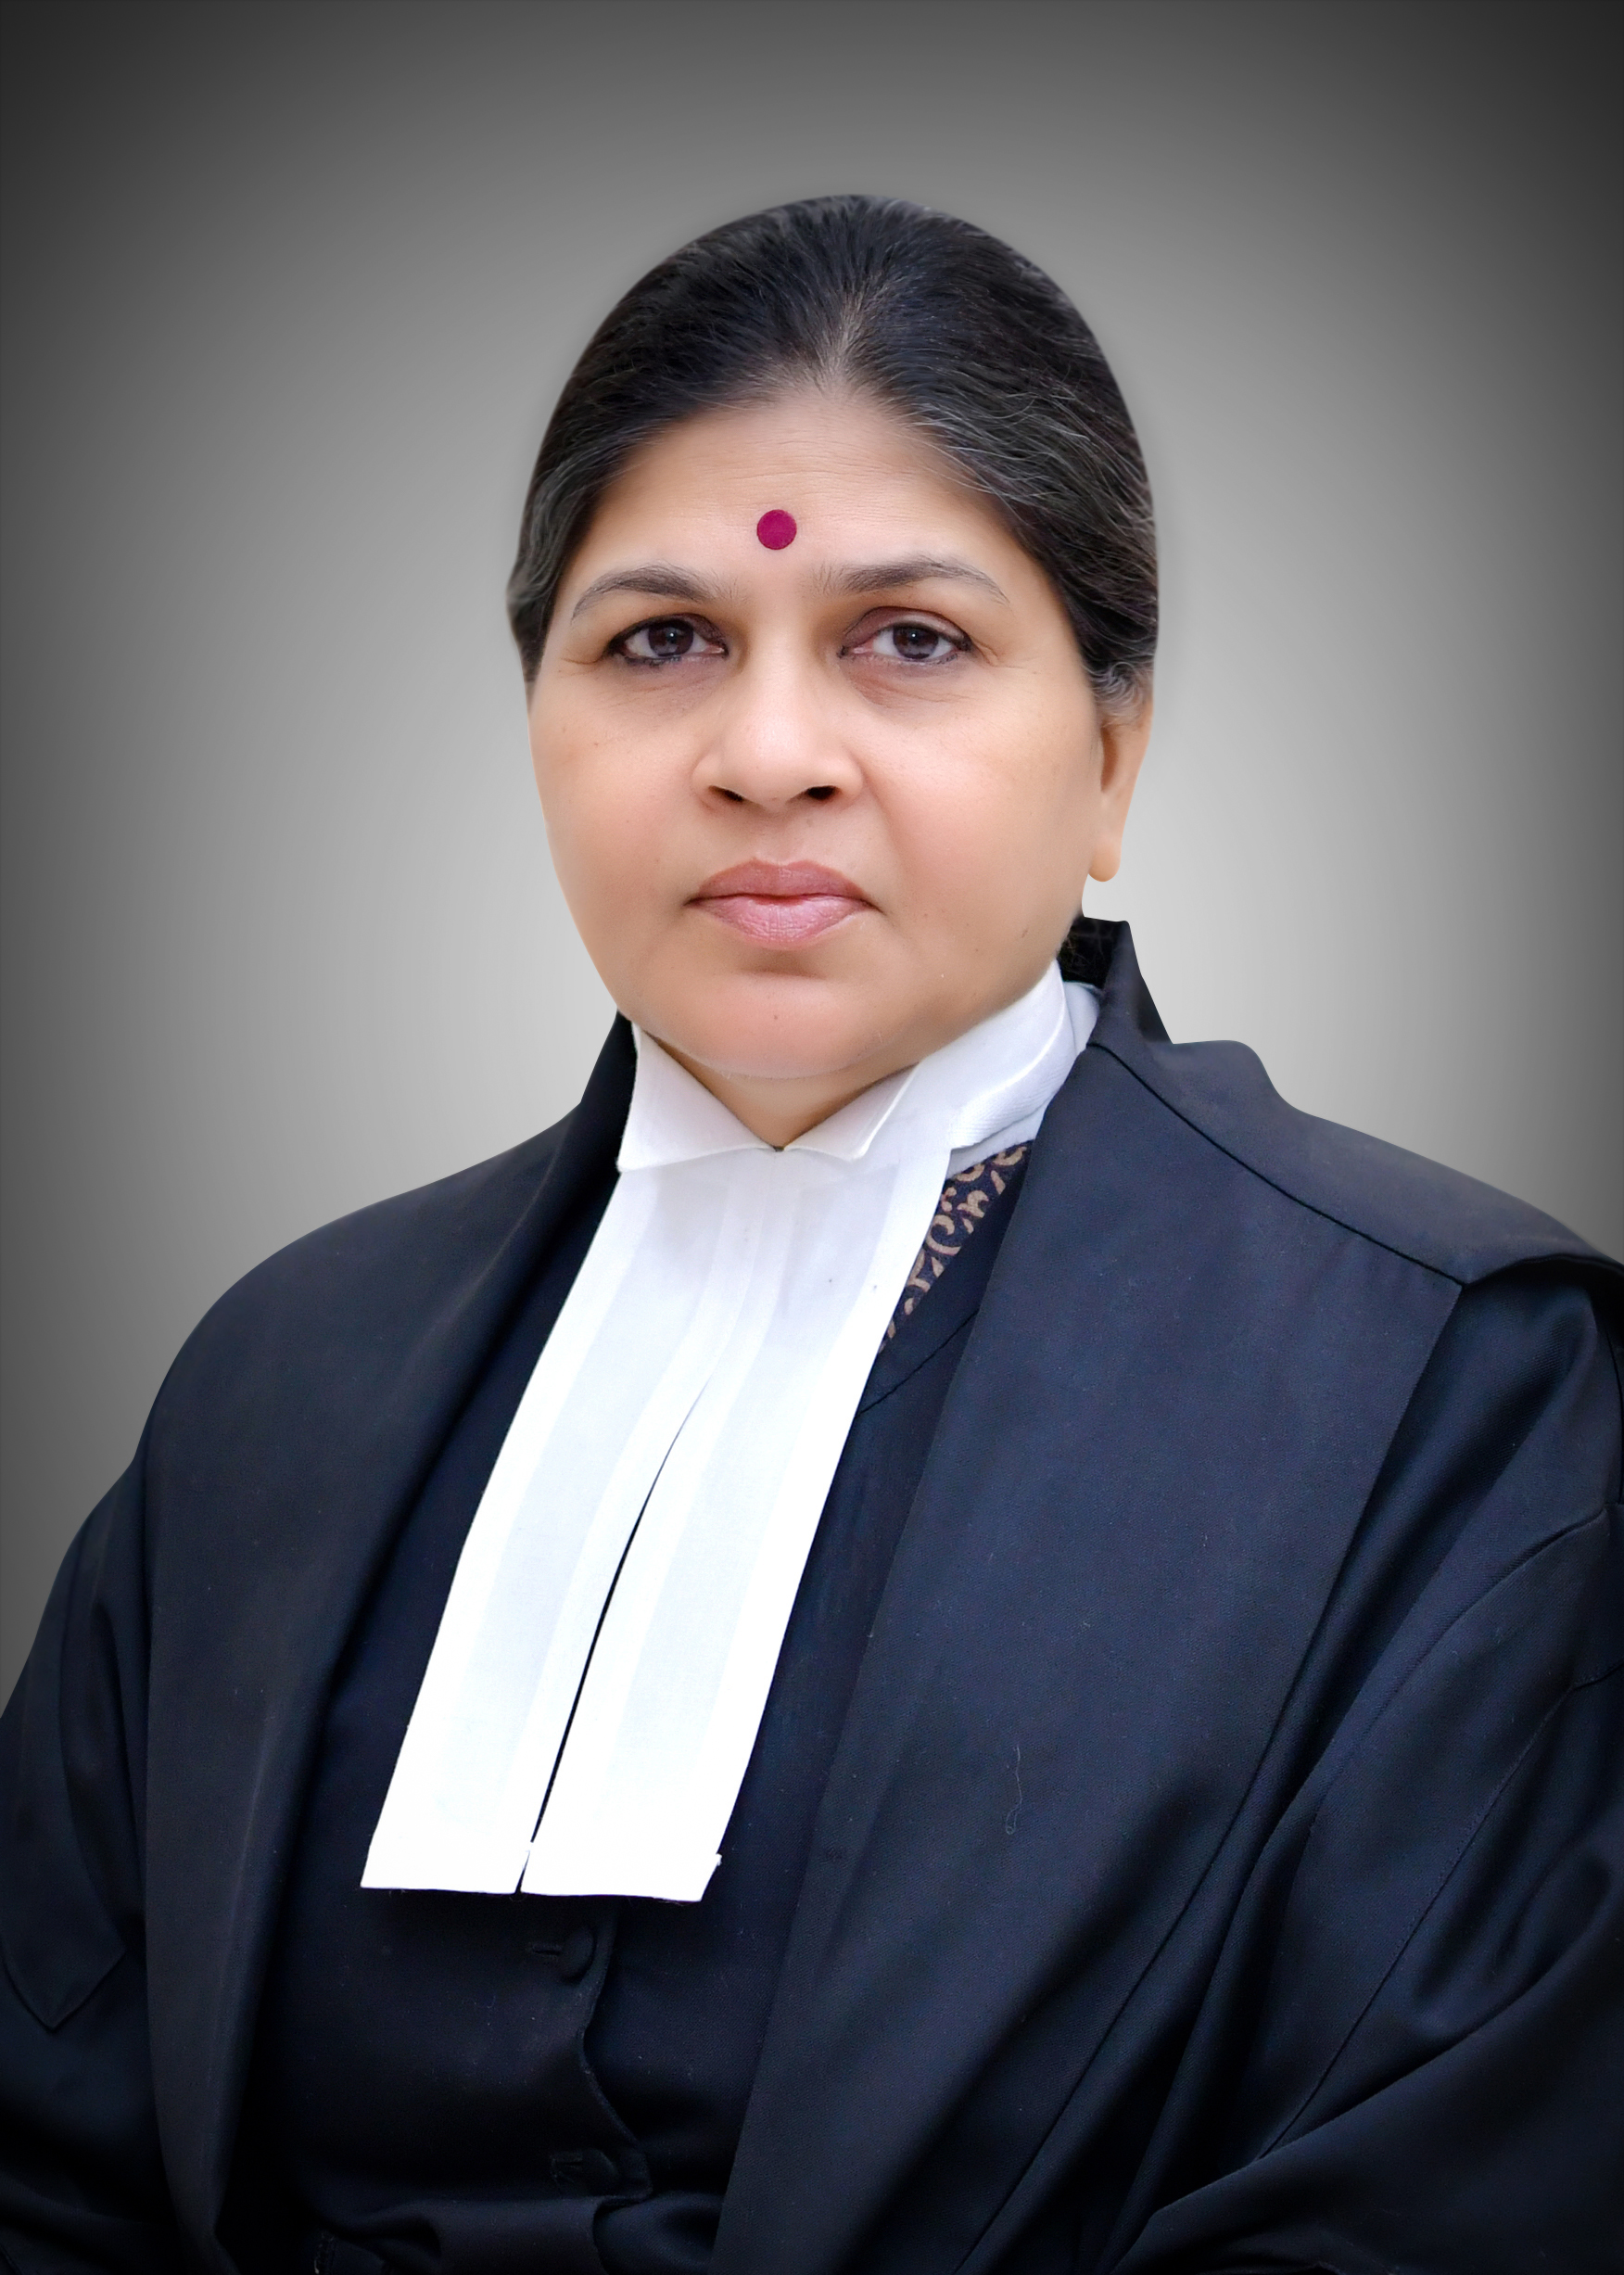 Honble Mrs Justice Sunita Agarwal